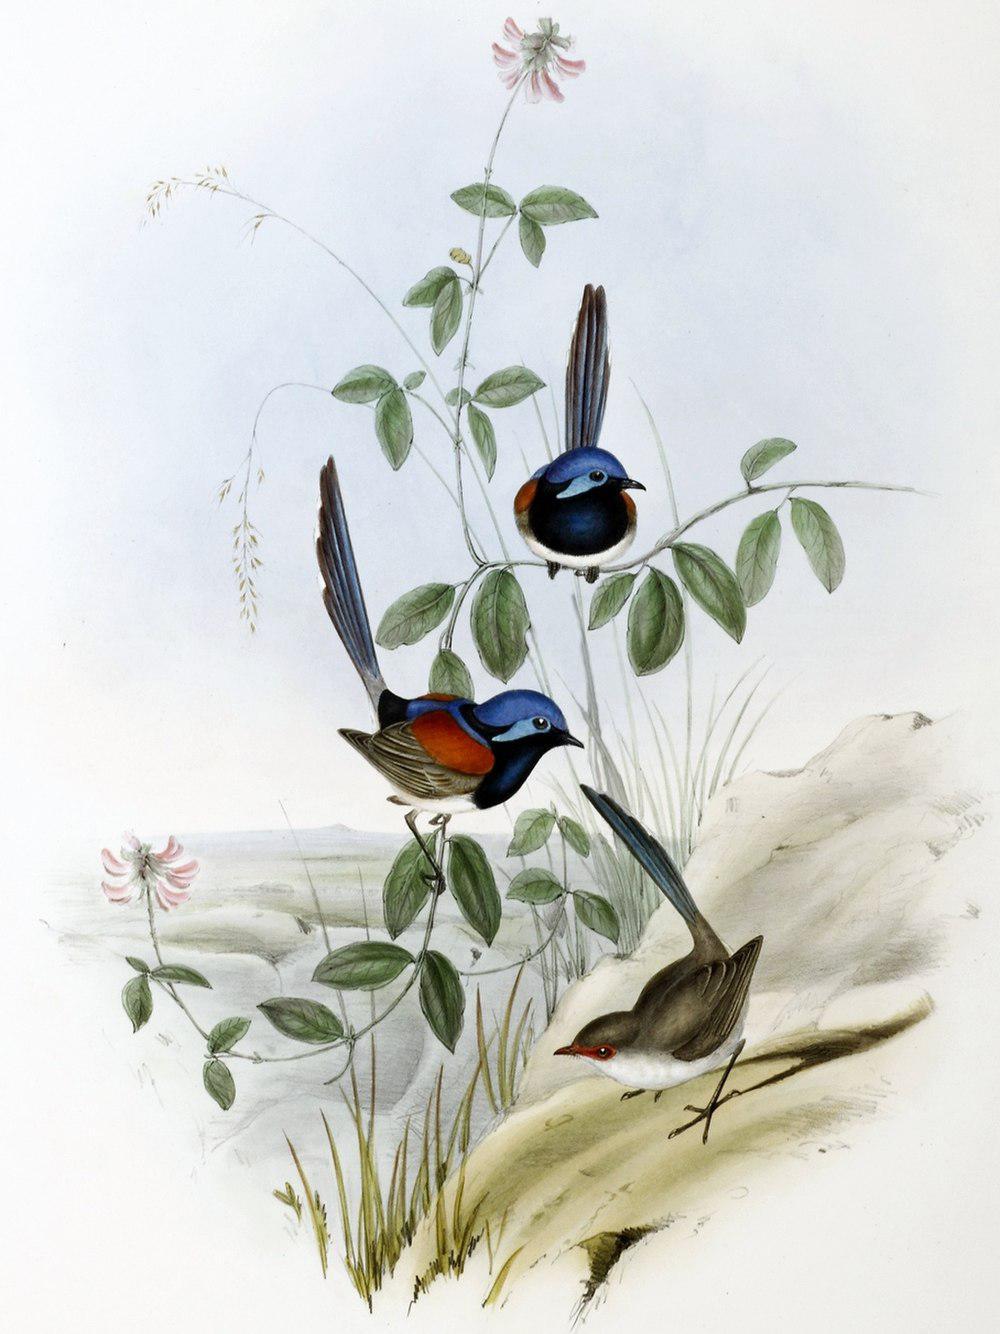 蓝胸细尾鹩莺 / Blue-breasted Fairywren / Malurus pulcherrimus